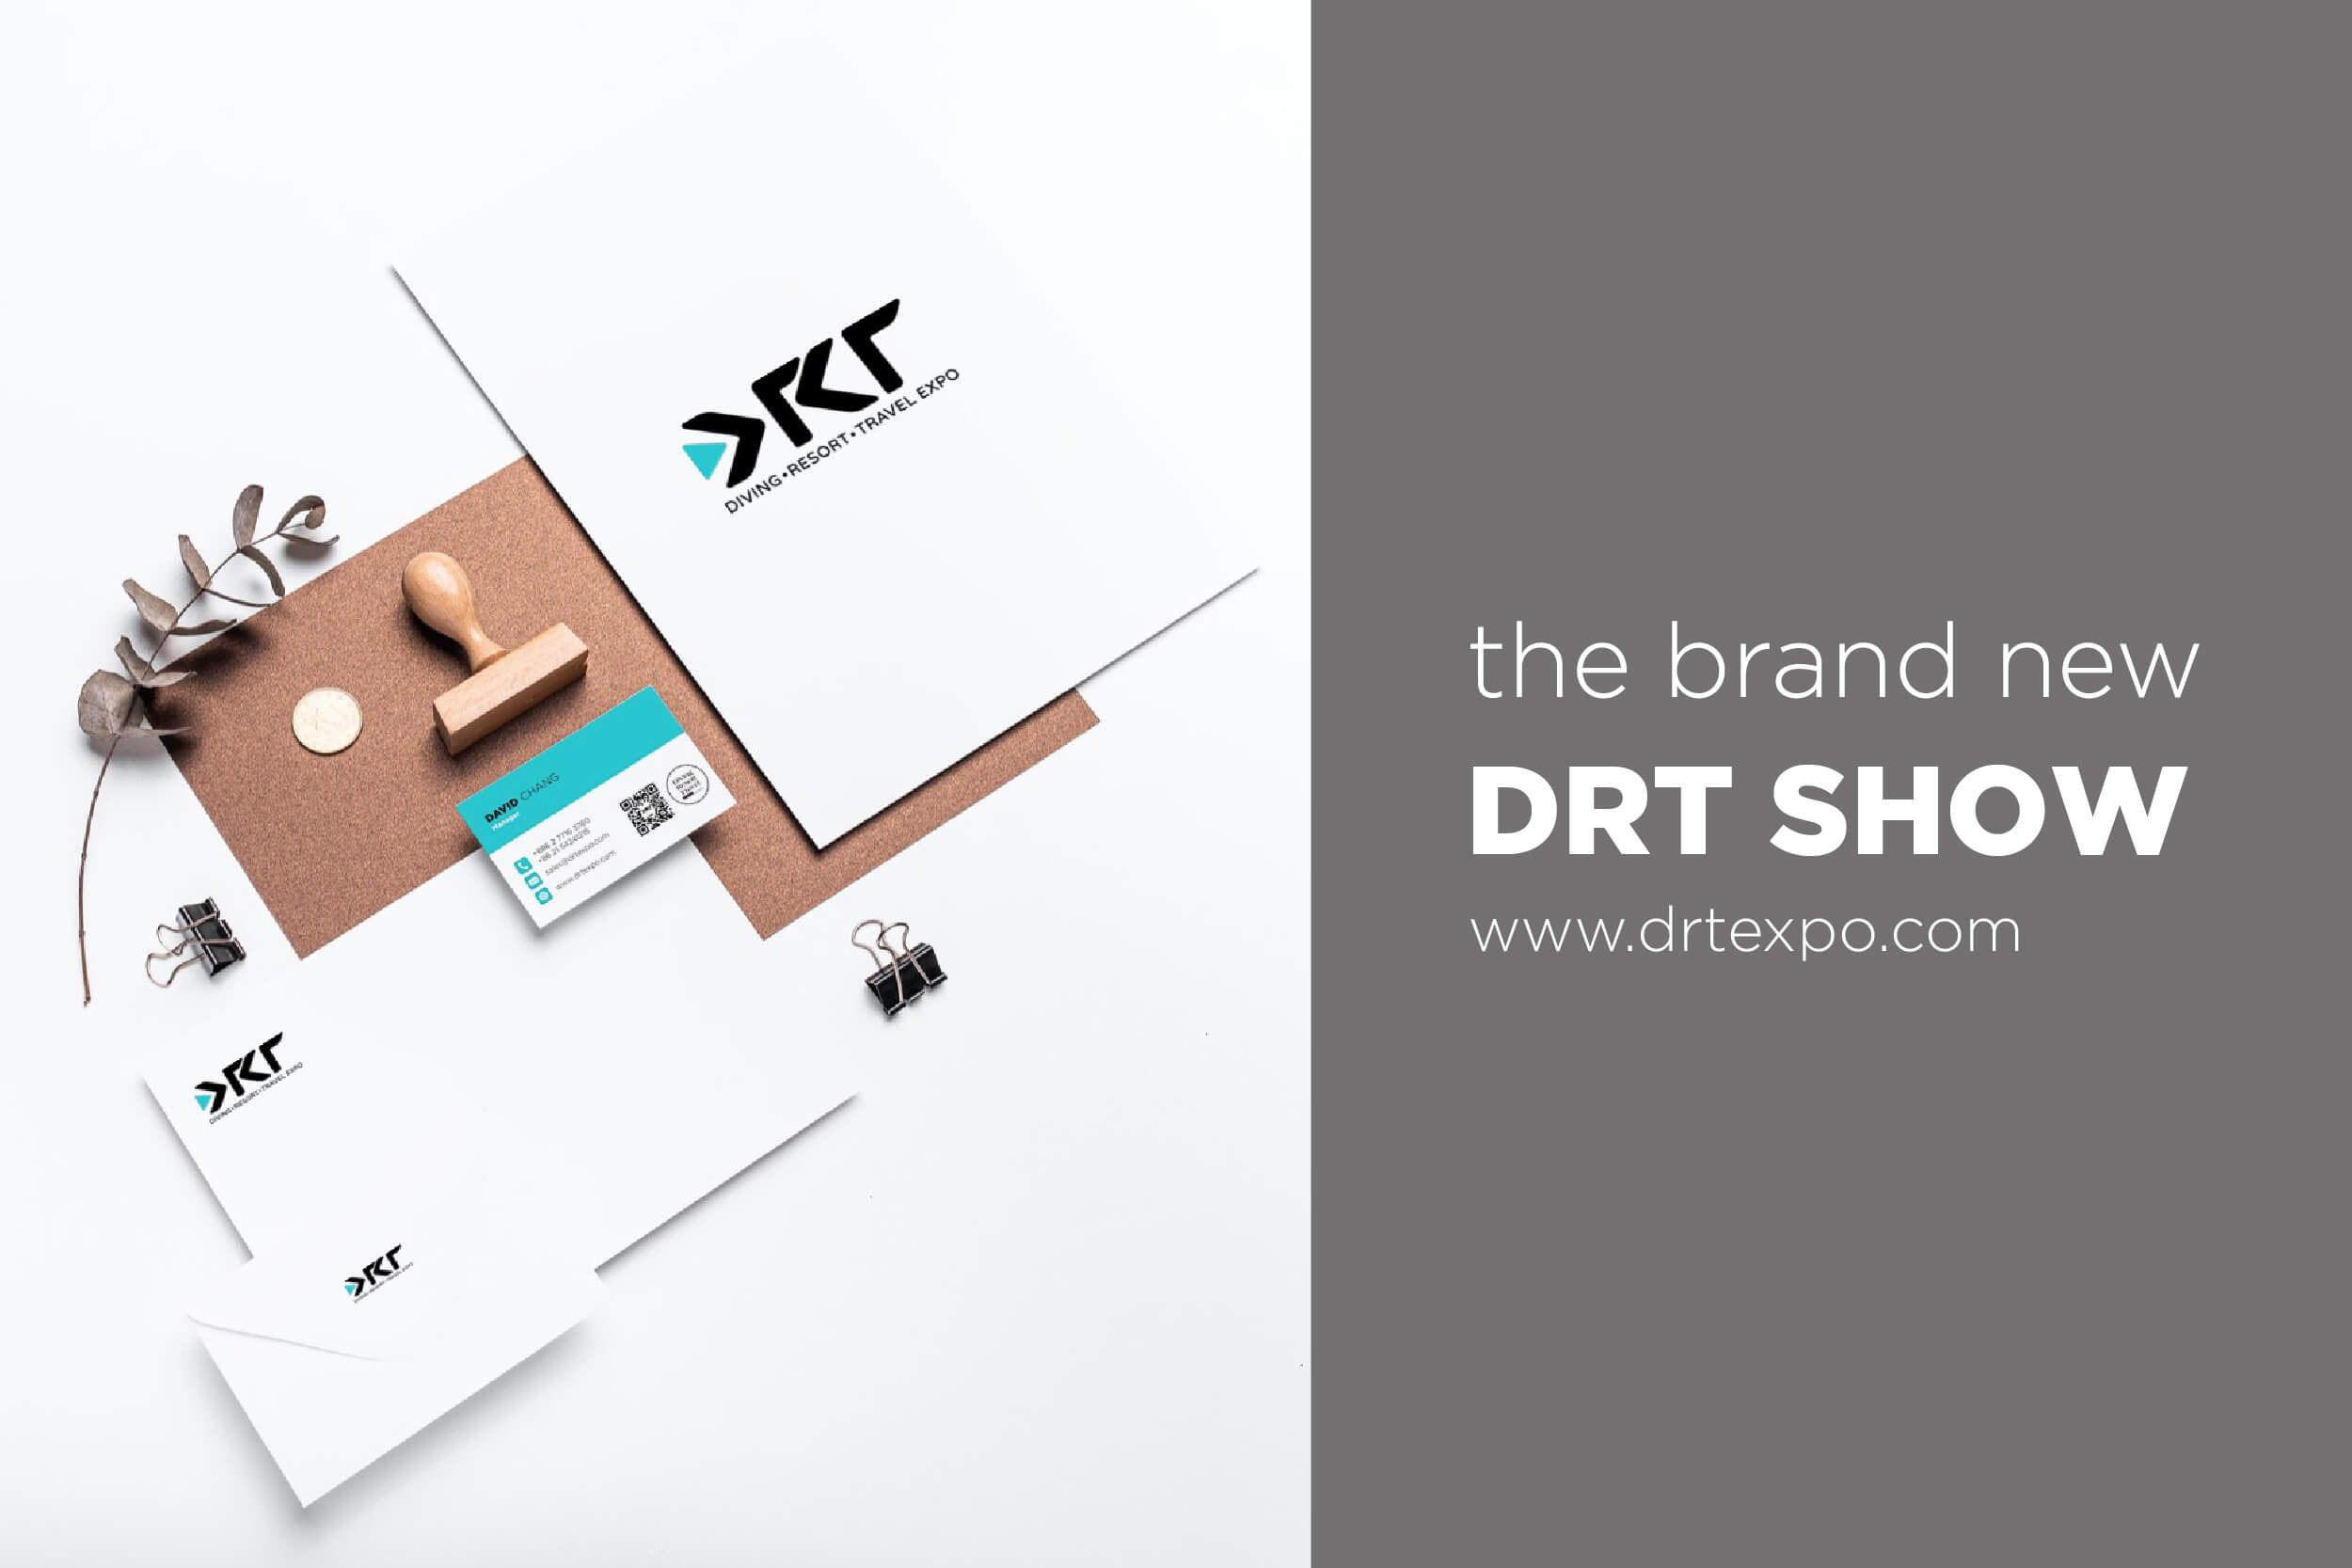 DRT SHOW new logo launch merch 07 The Brand-New DRT SHOW 全新品牌識別正式發布